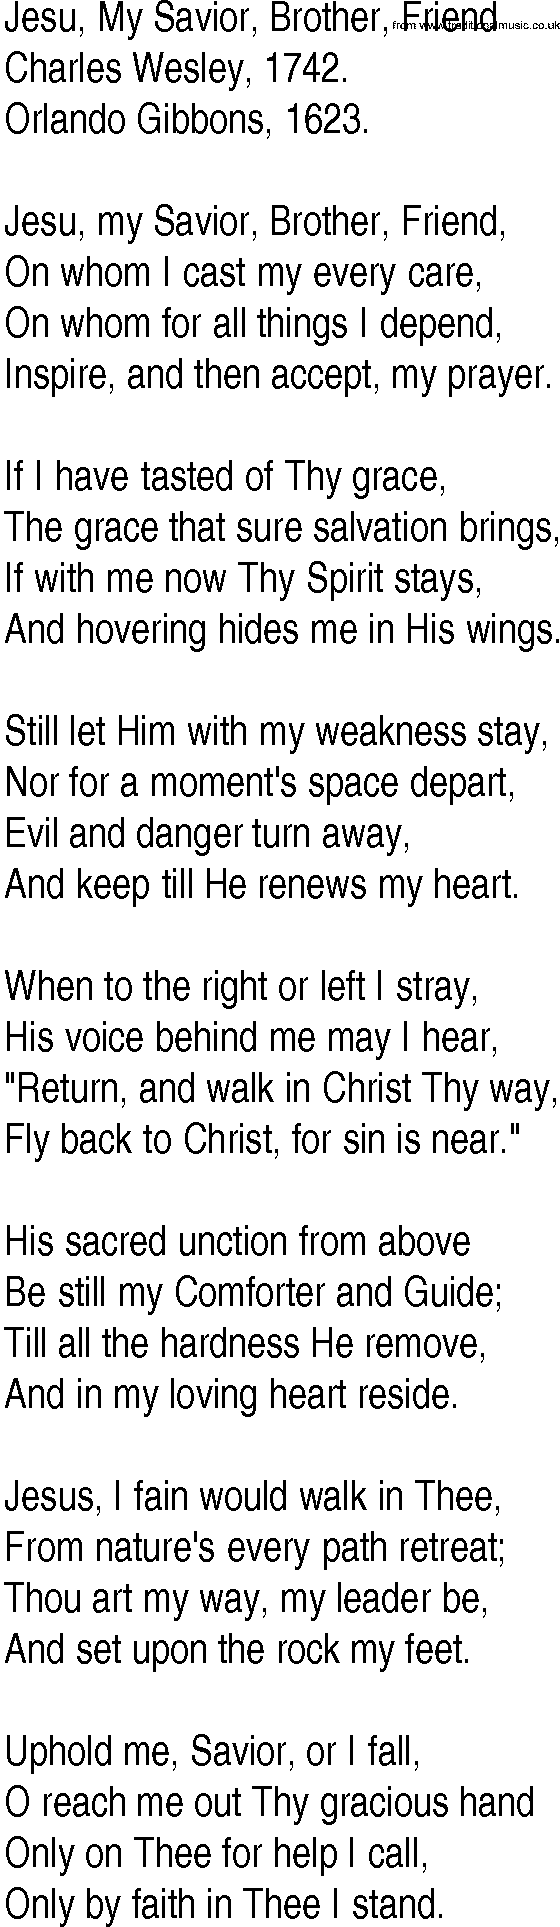 Hymn and Gospel Song: Jesu, My Savior, Brother, Friend by Charles Wesley lyrics